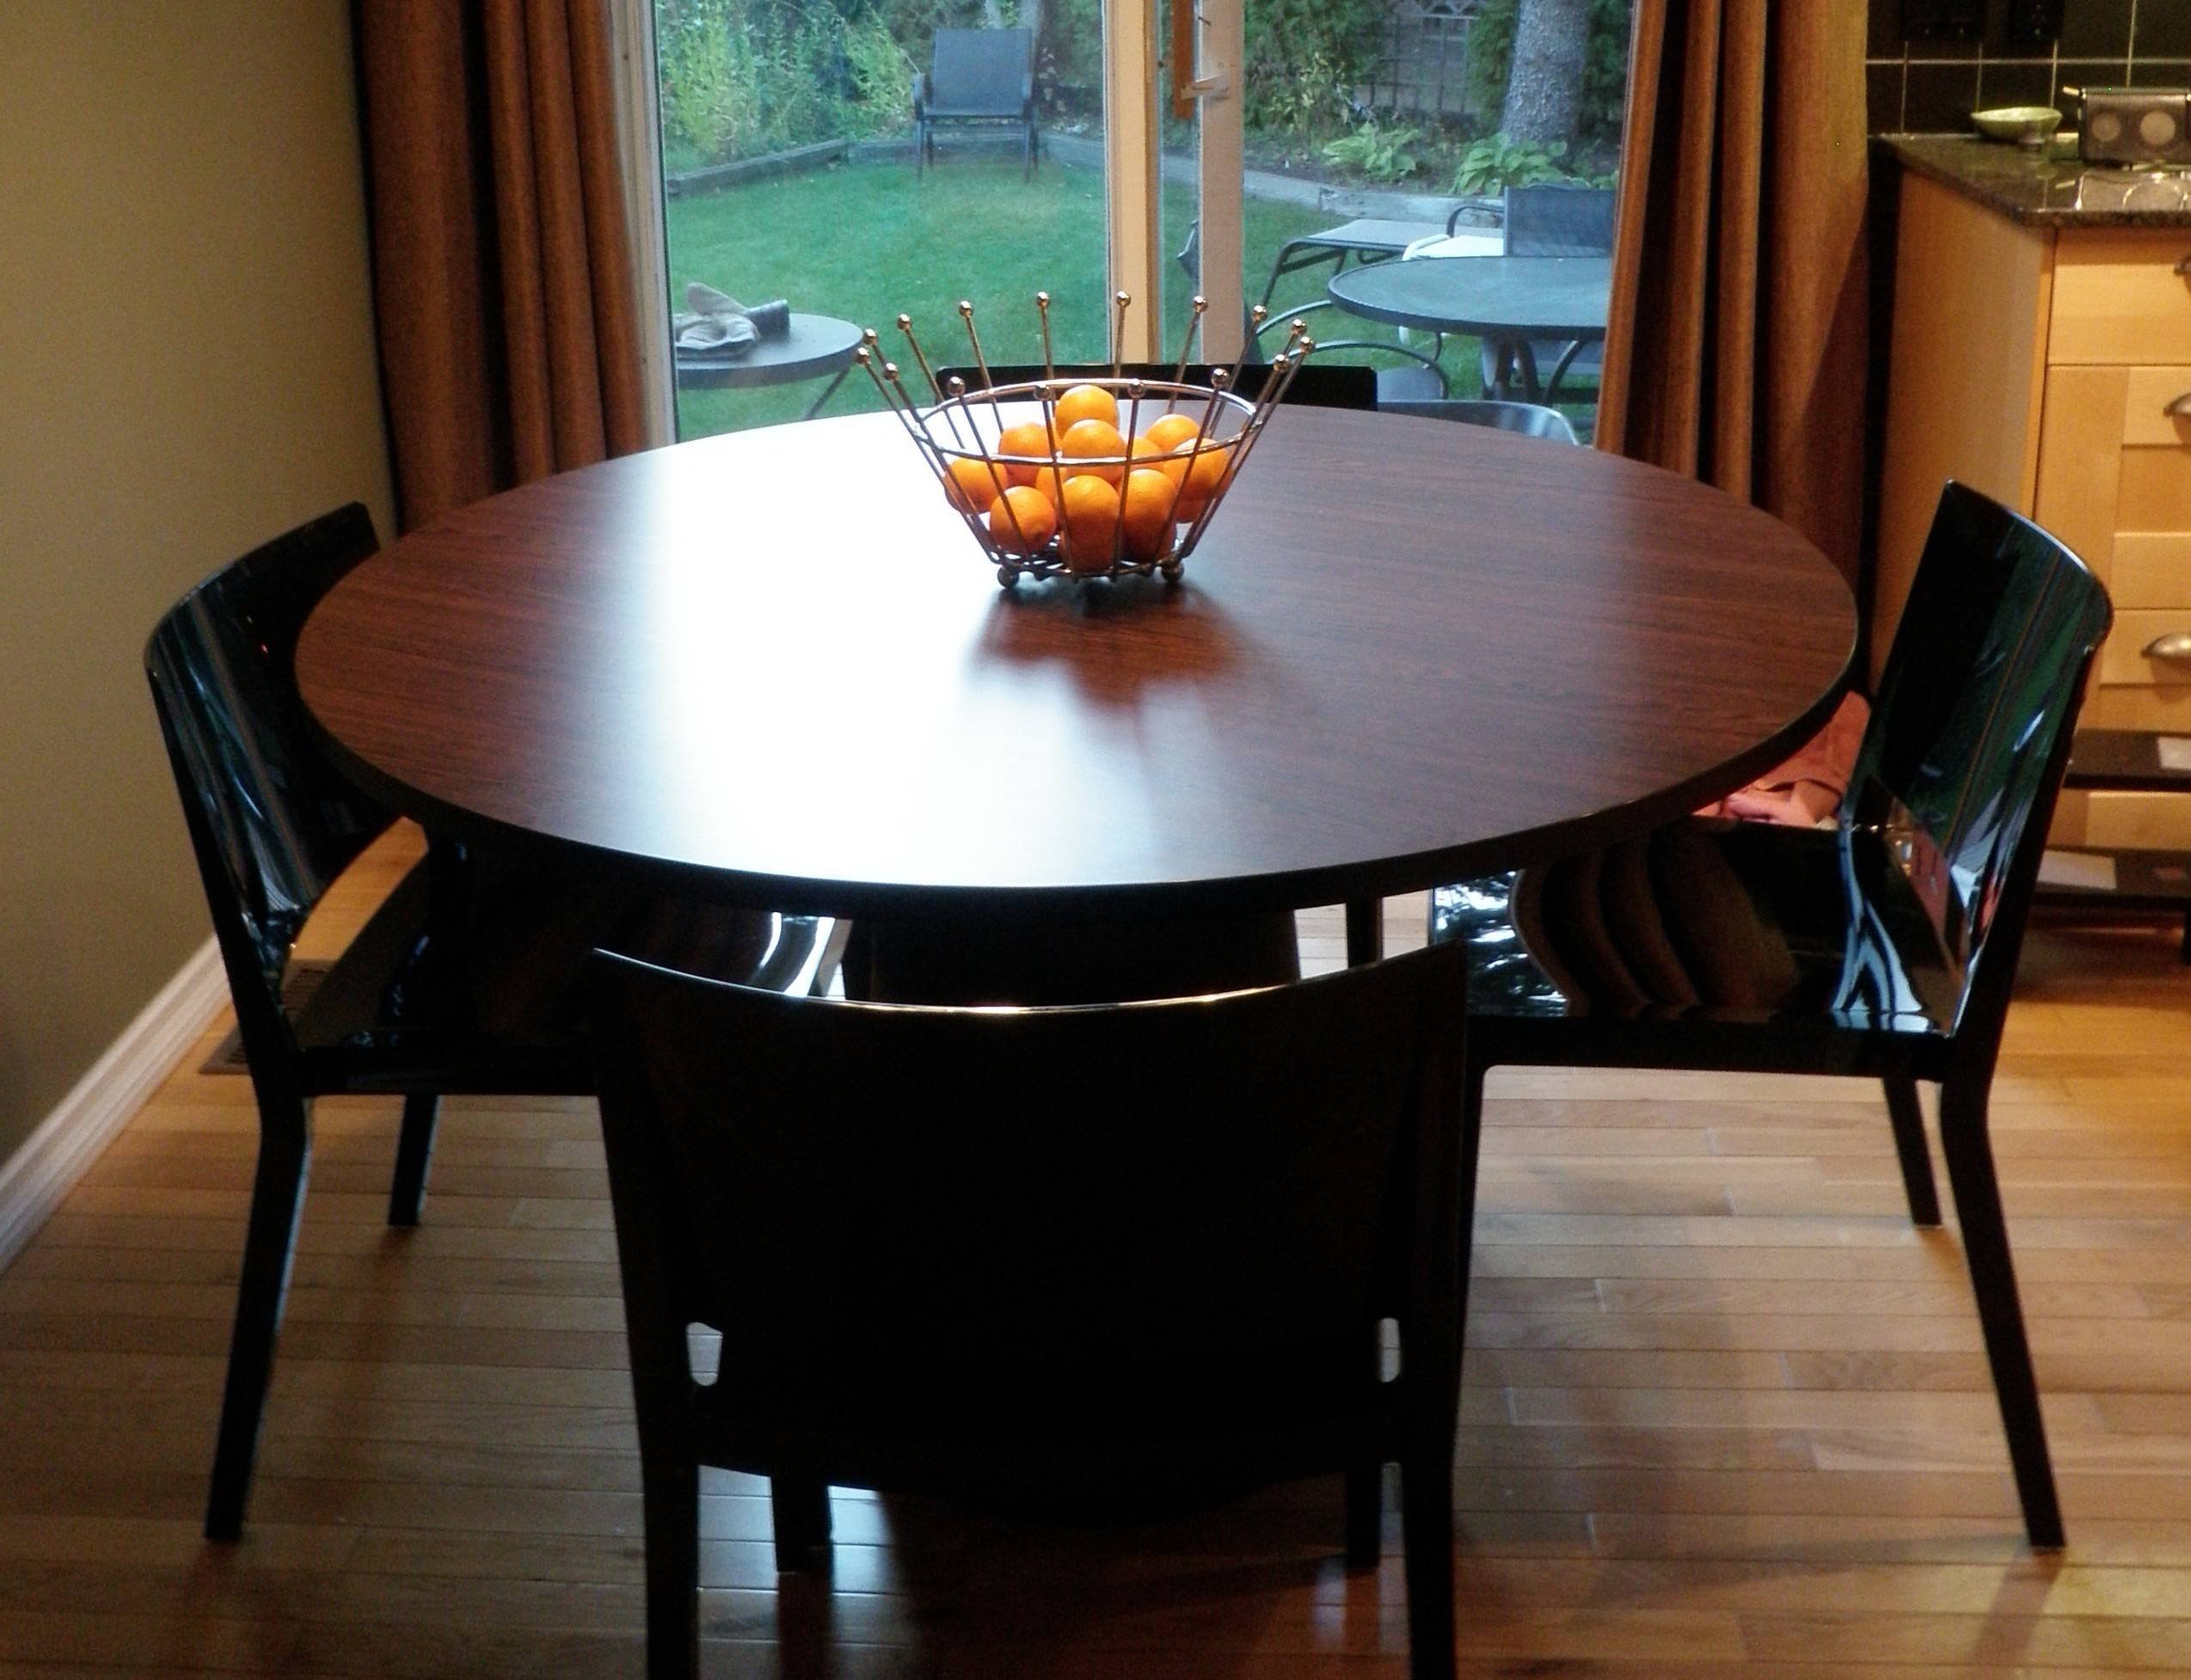 Кухонные столы 90 см. Стол Lakri Round Table. Обеденный стол Barnes Round Dining Table. Круглый стол ORDT-d6060-SPR. Обеденный стол Apriori t 100.